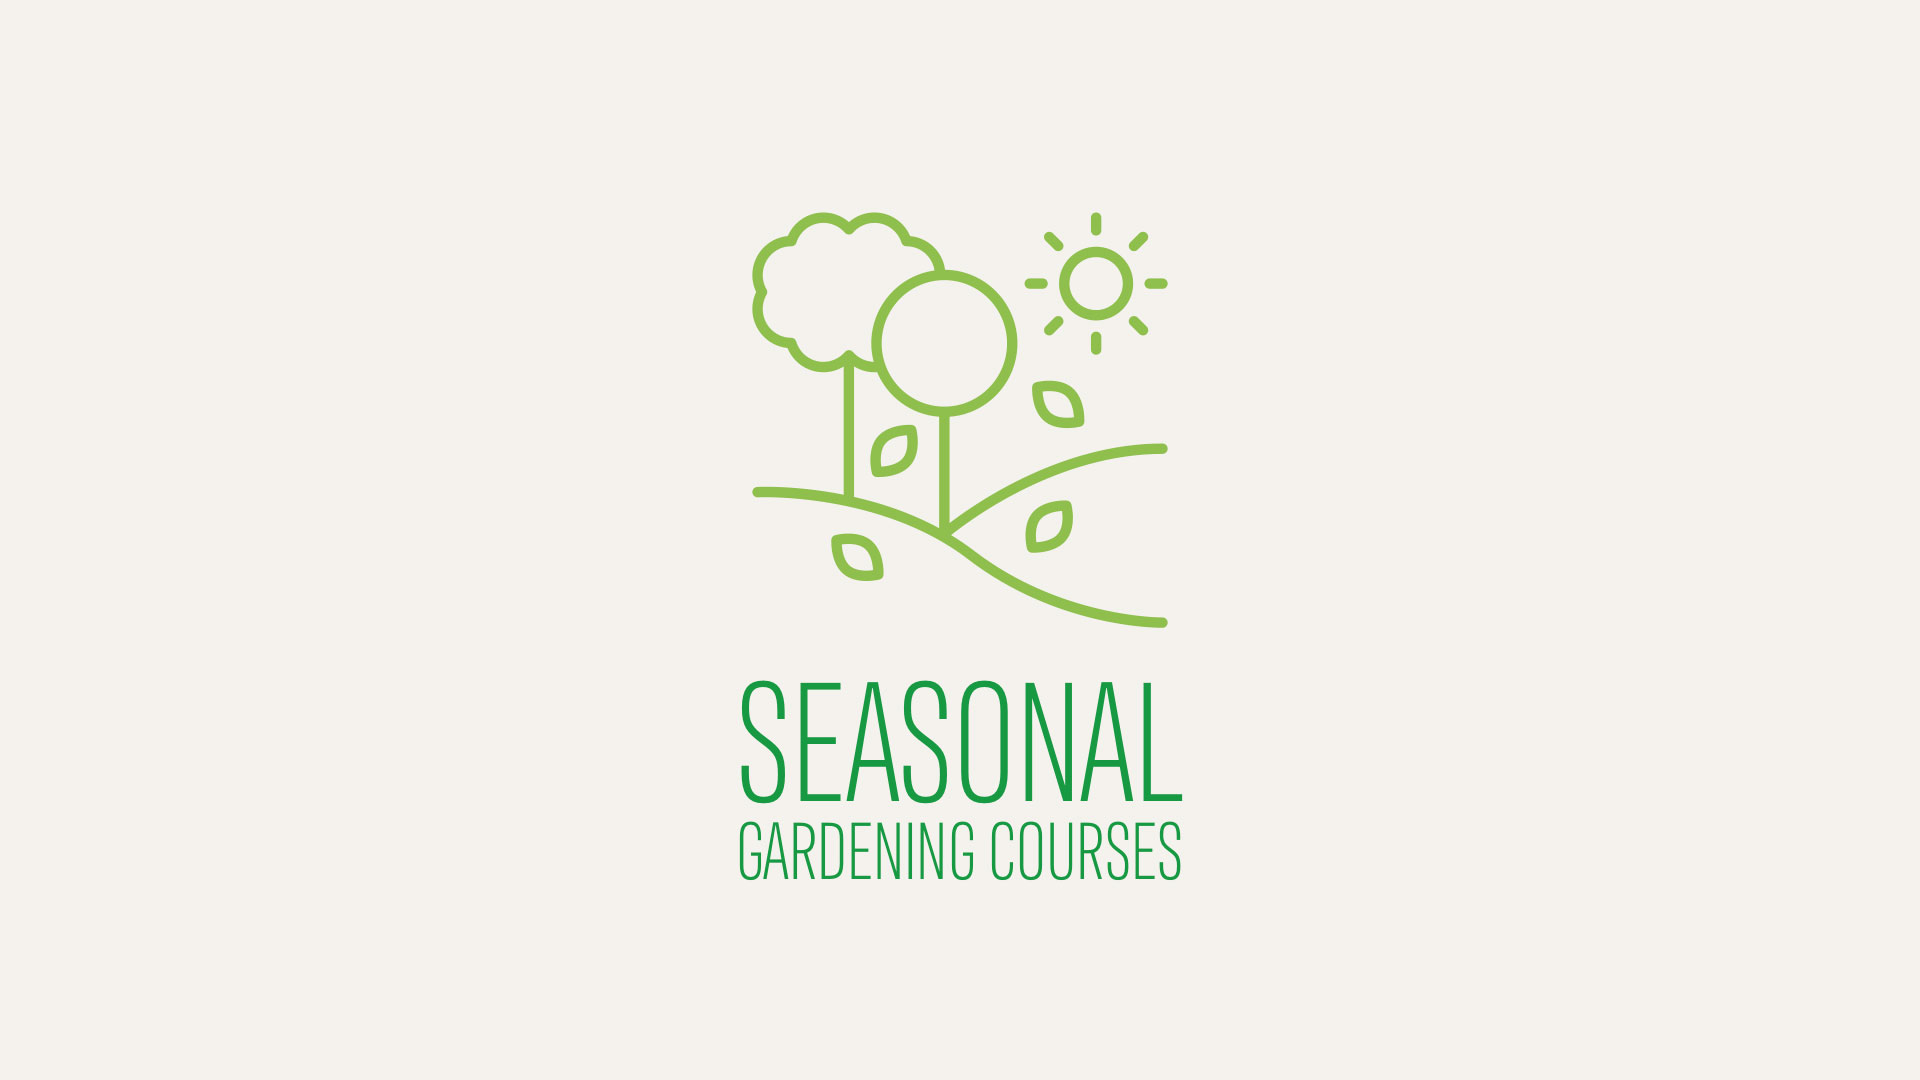 Seasonal Gardening Courses at Dunmore Country School